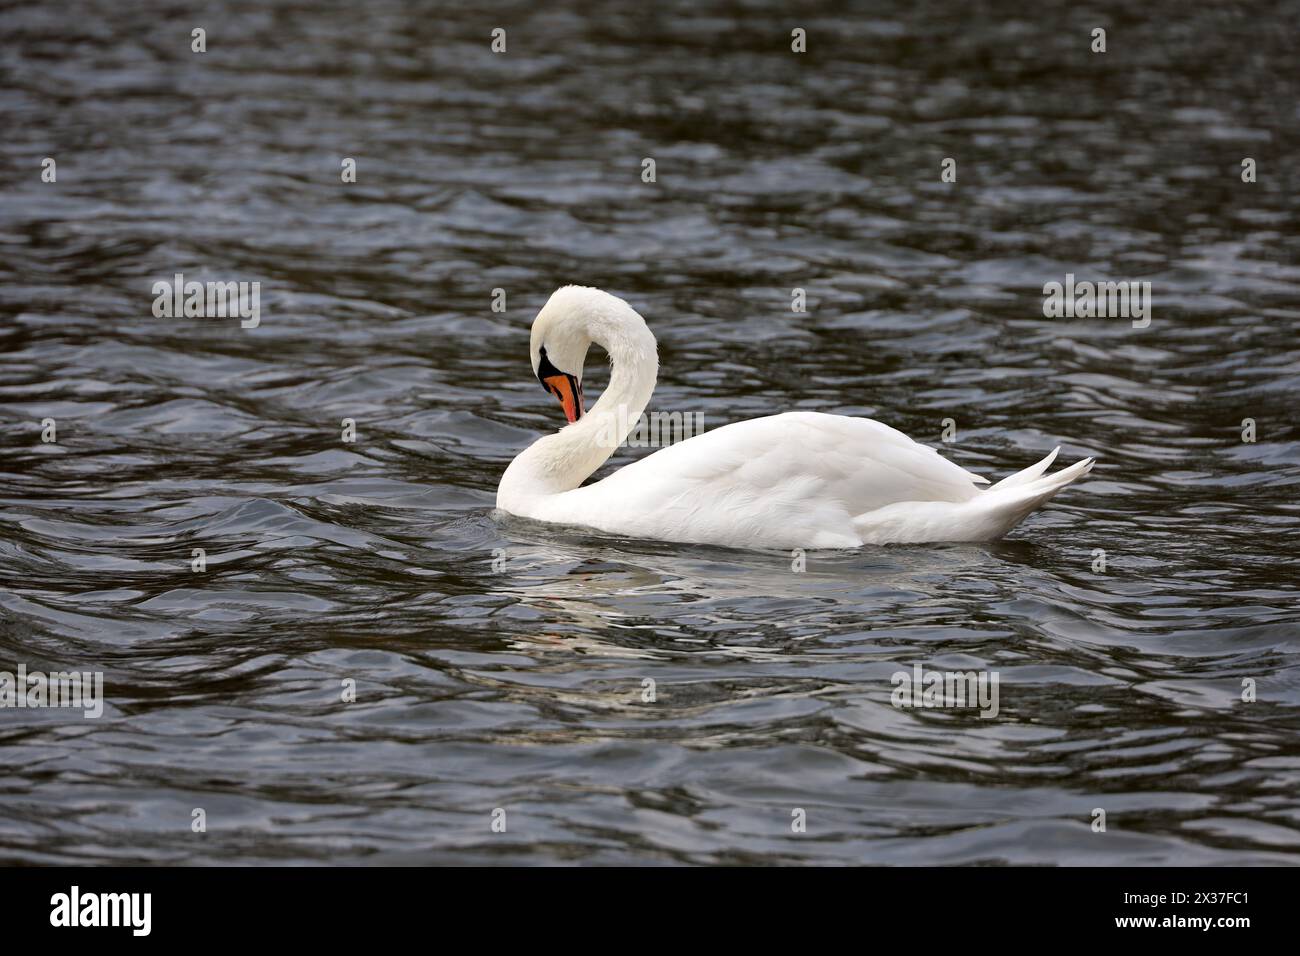 White swan swimming in a lake, spring season Stock Photo